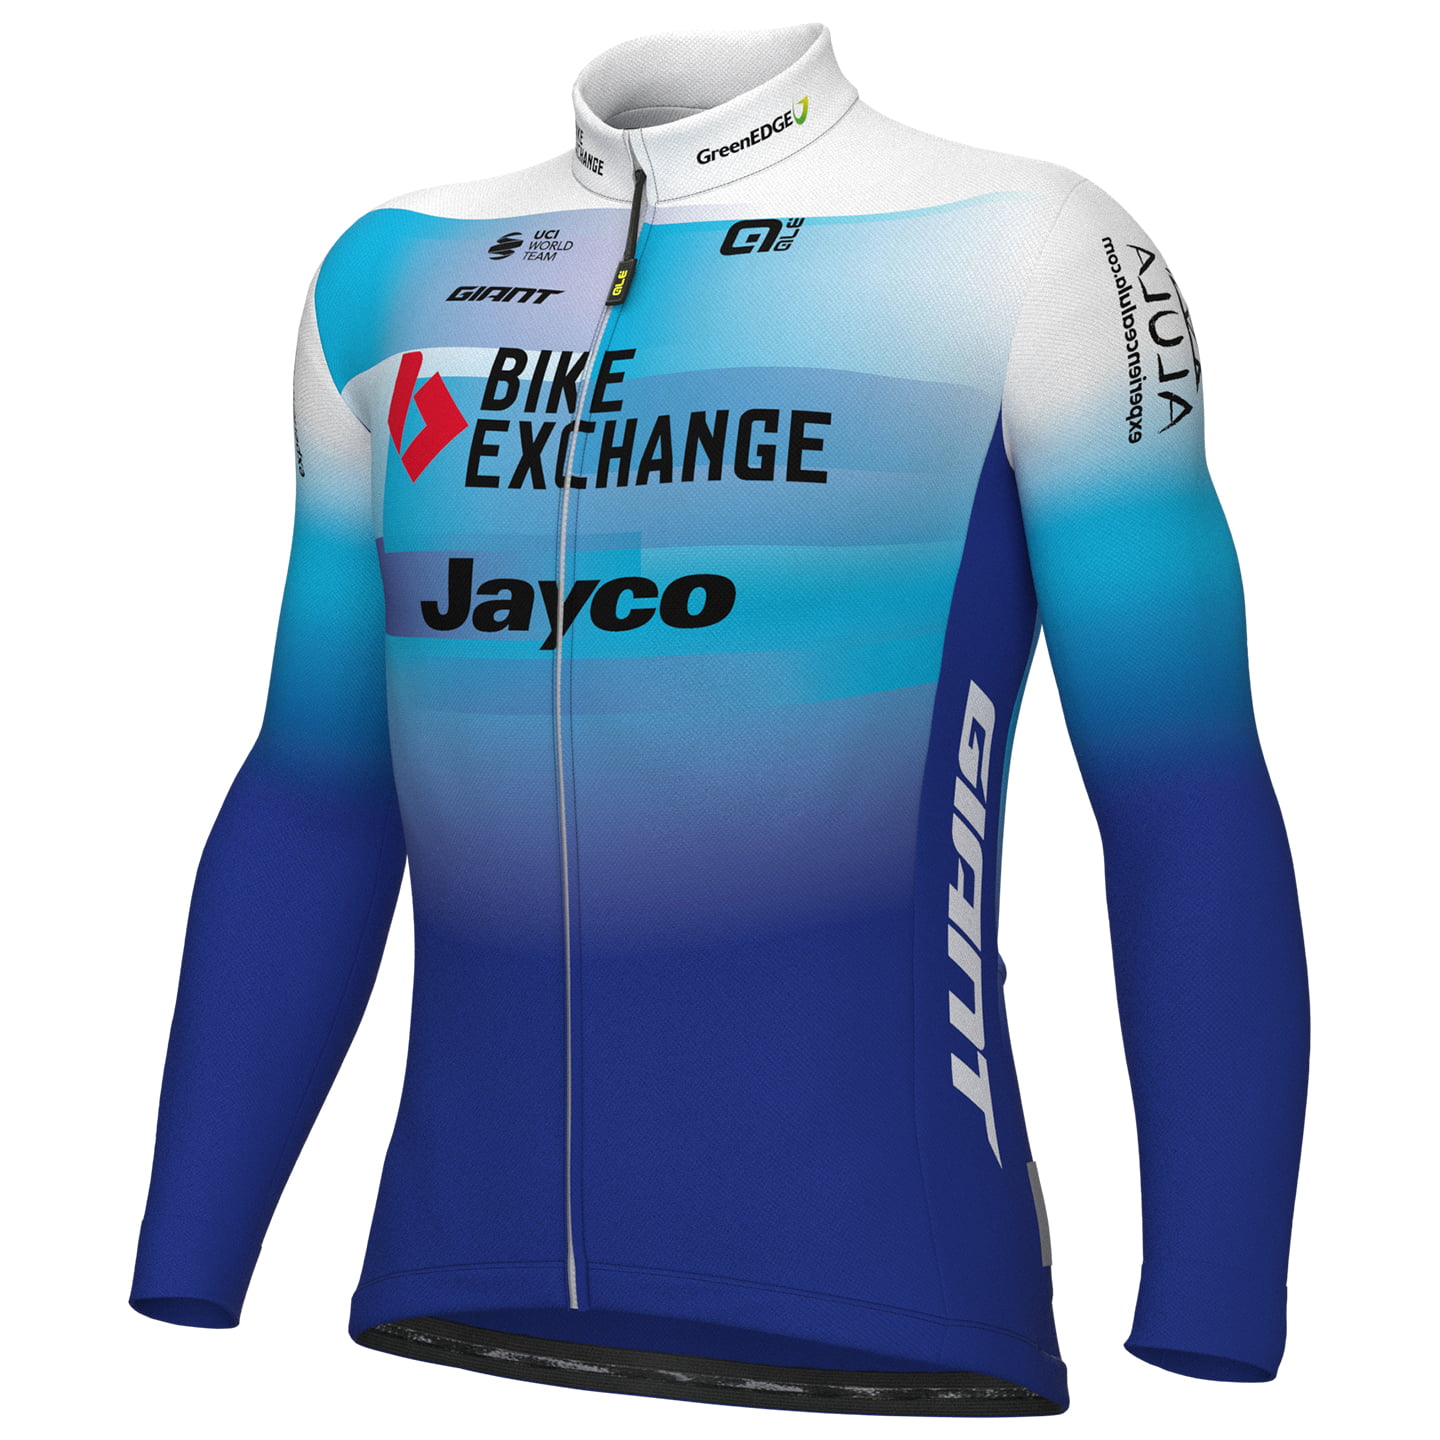 TEAM BIKEEXCHANGE-JAYCO 2022 Long Sleeve Jersey, for men, size 3XL, Bike shirt, Cycling gear